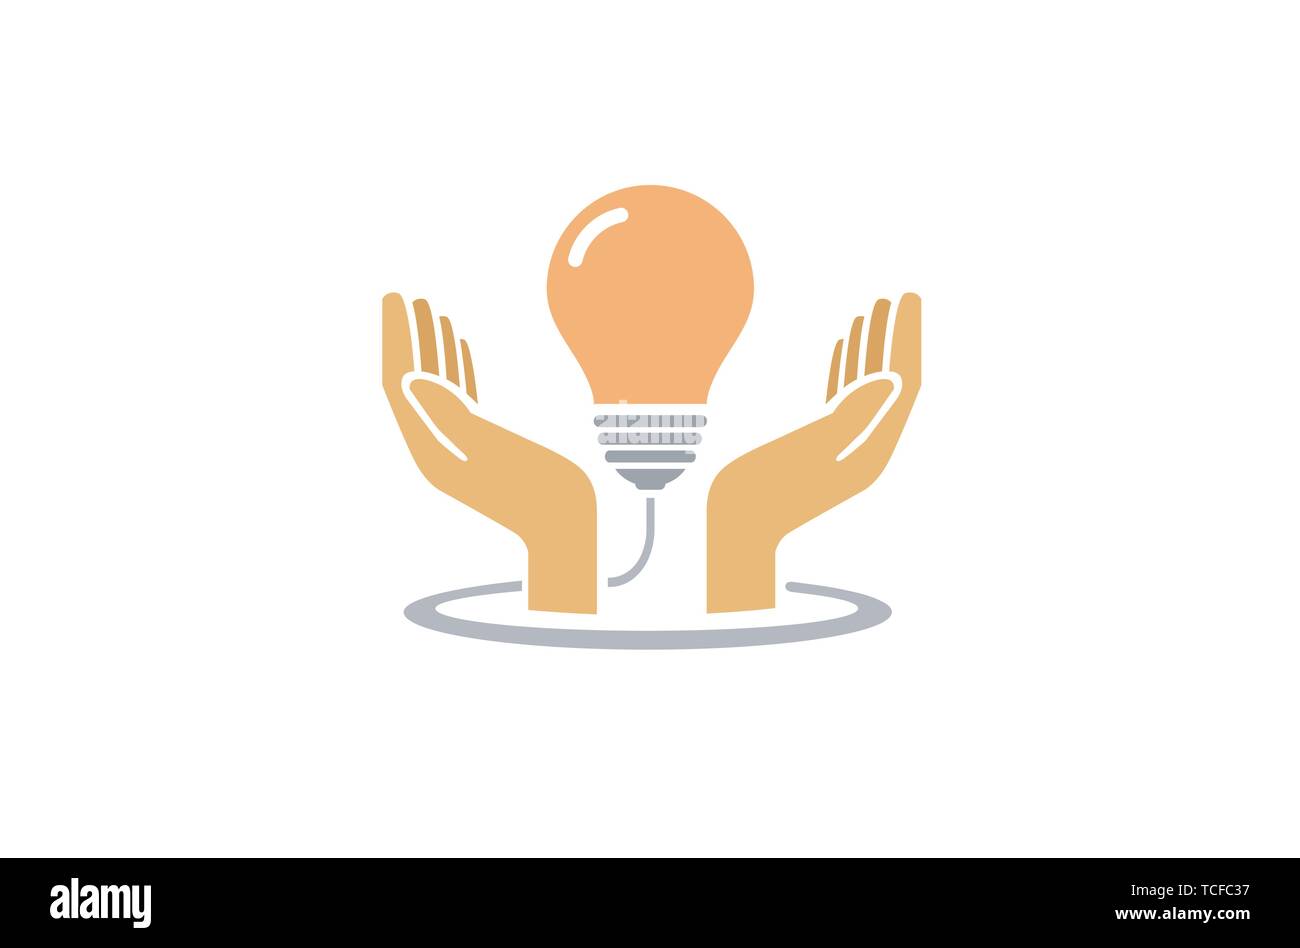 Creative Lamp Hands Logo Vector Design Illustration Stock Vector